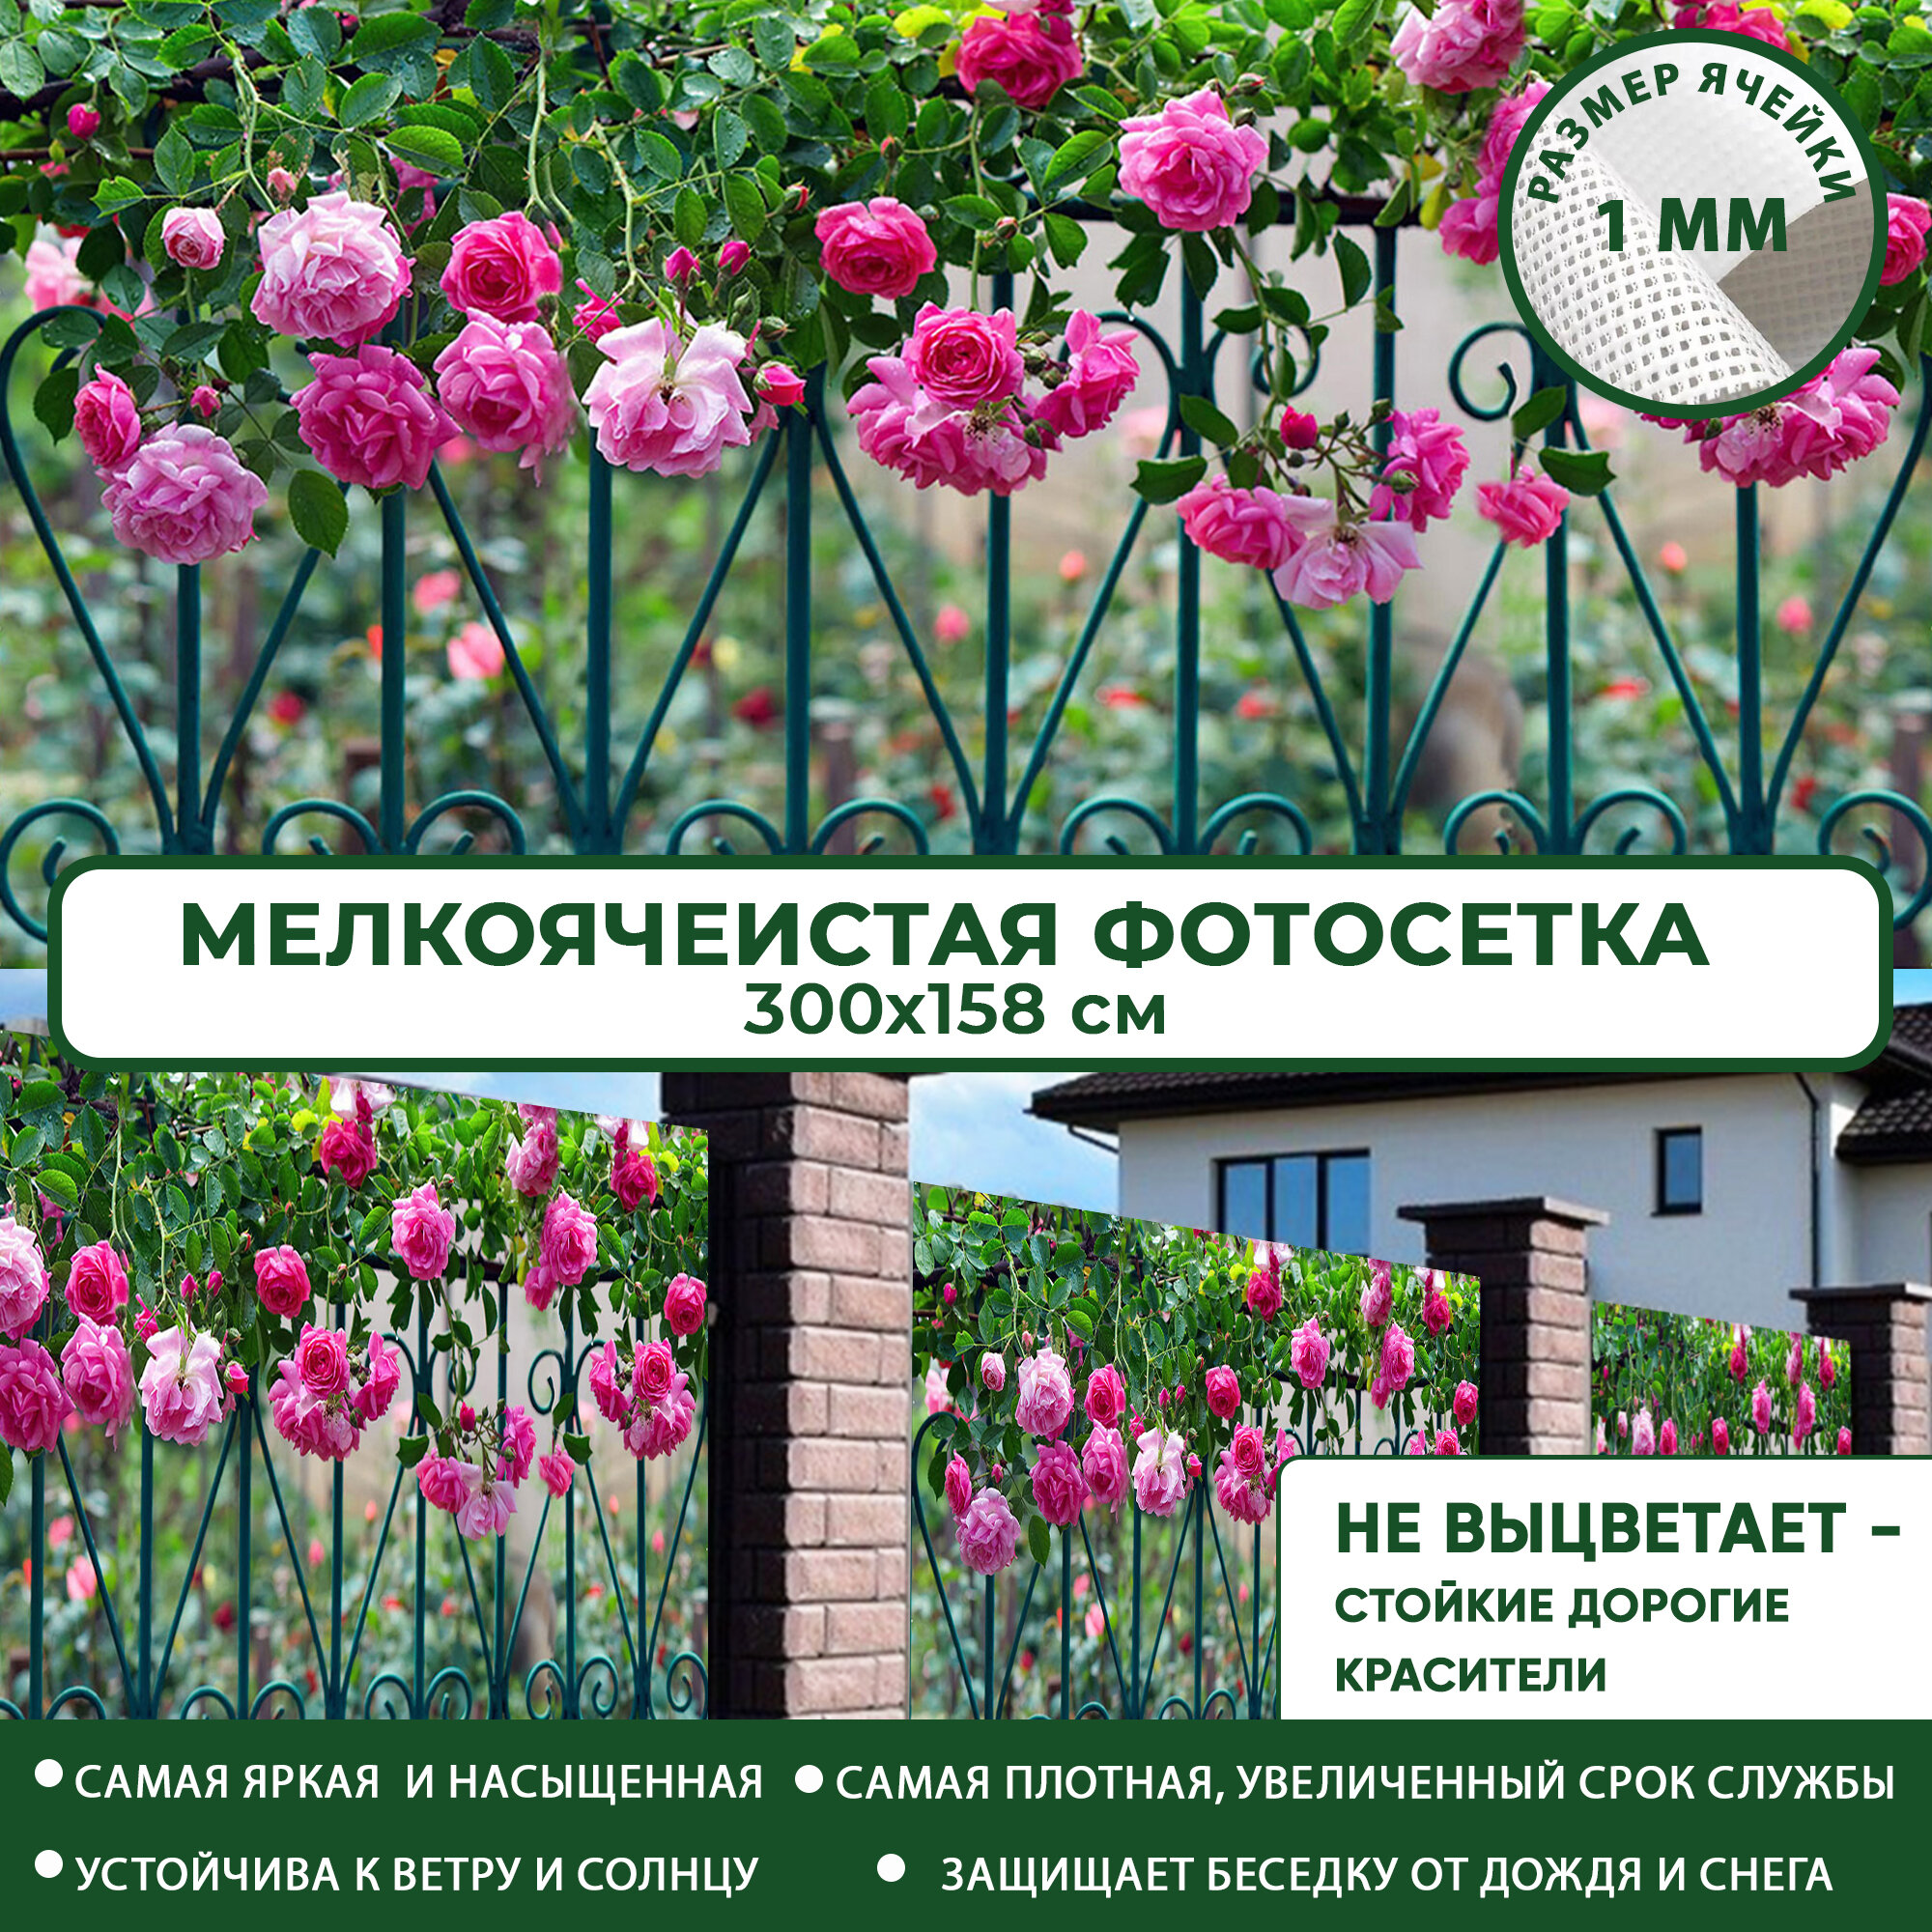 Фотосетка Мечта для забора беседки террасы 300x158 см, "Розы на заборе" , фотофасад для дома дачи сада